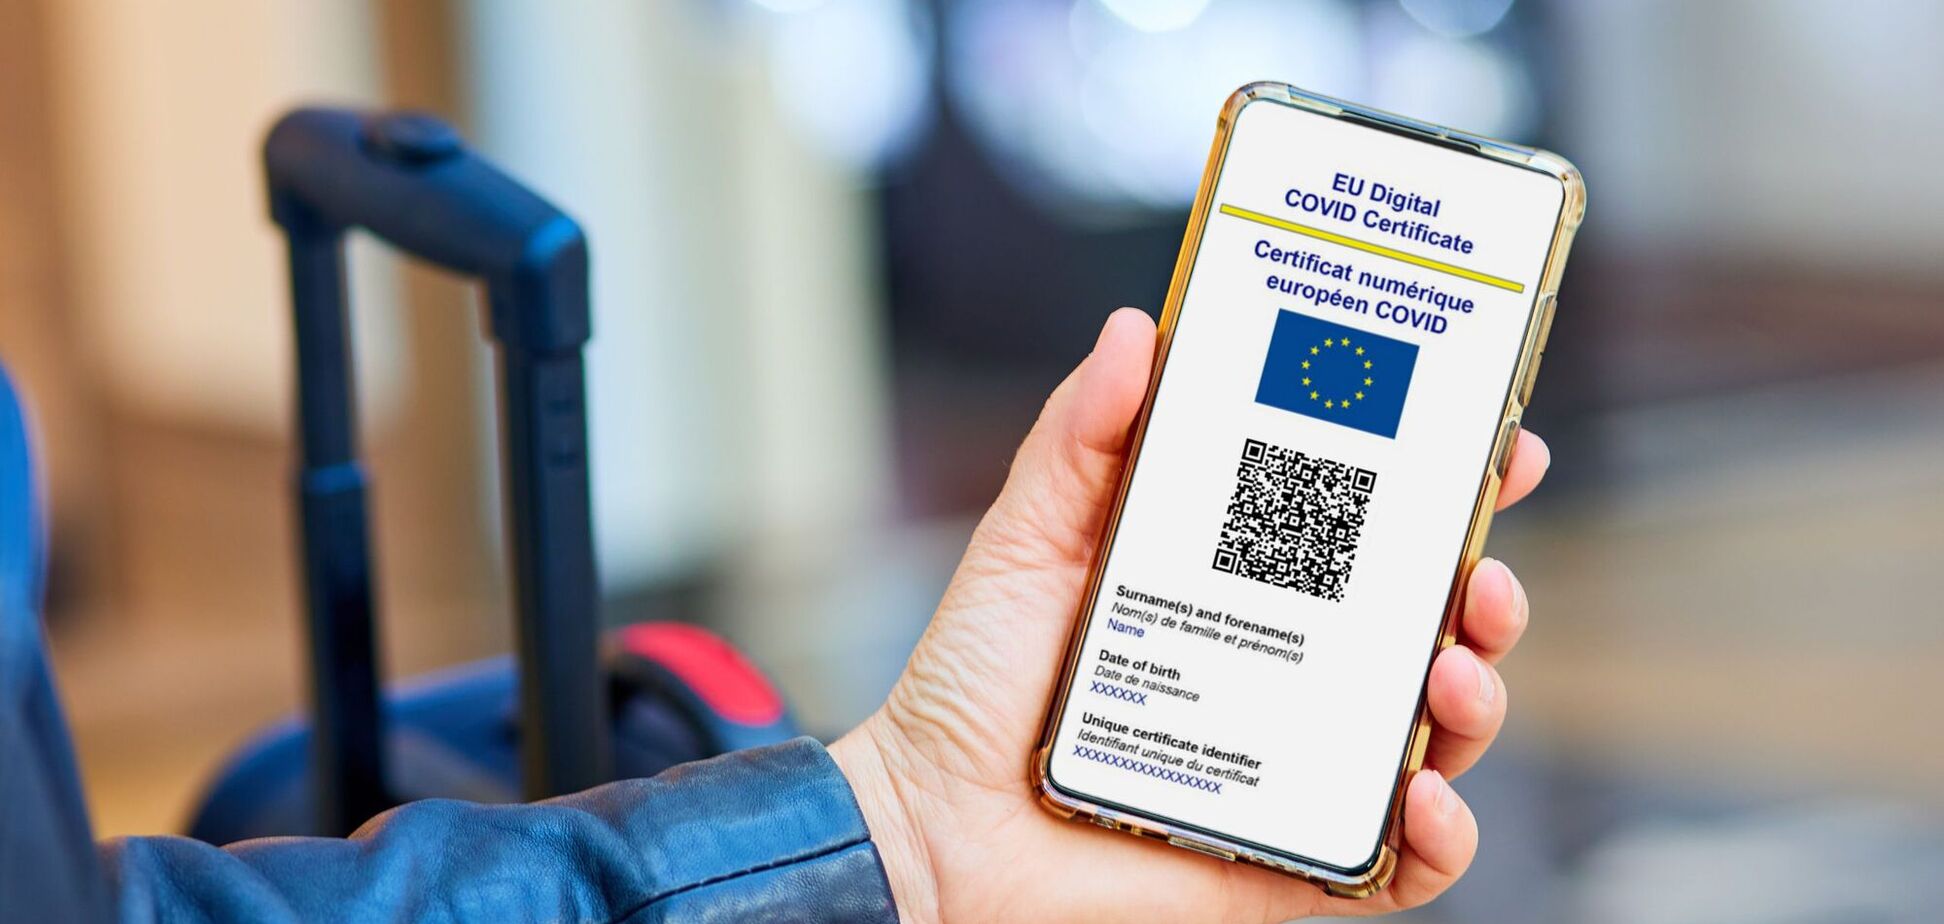 Цифровой COVID-паспорт европейского образца